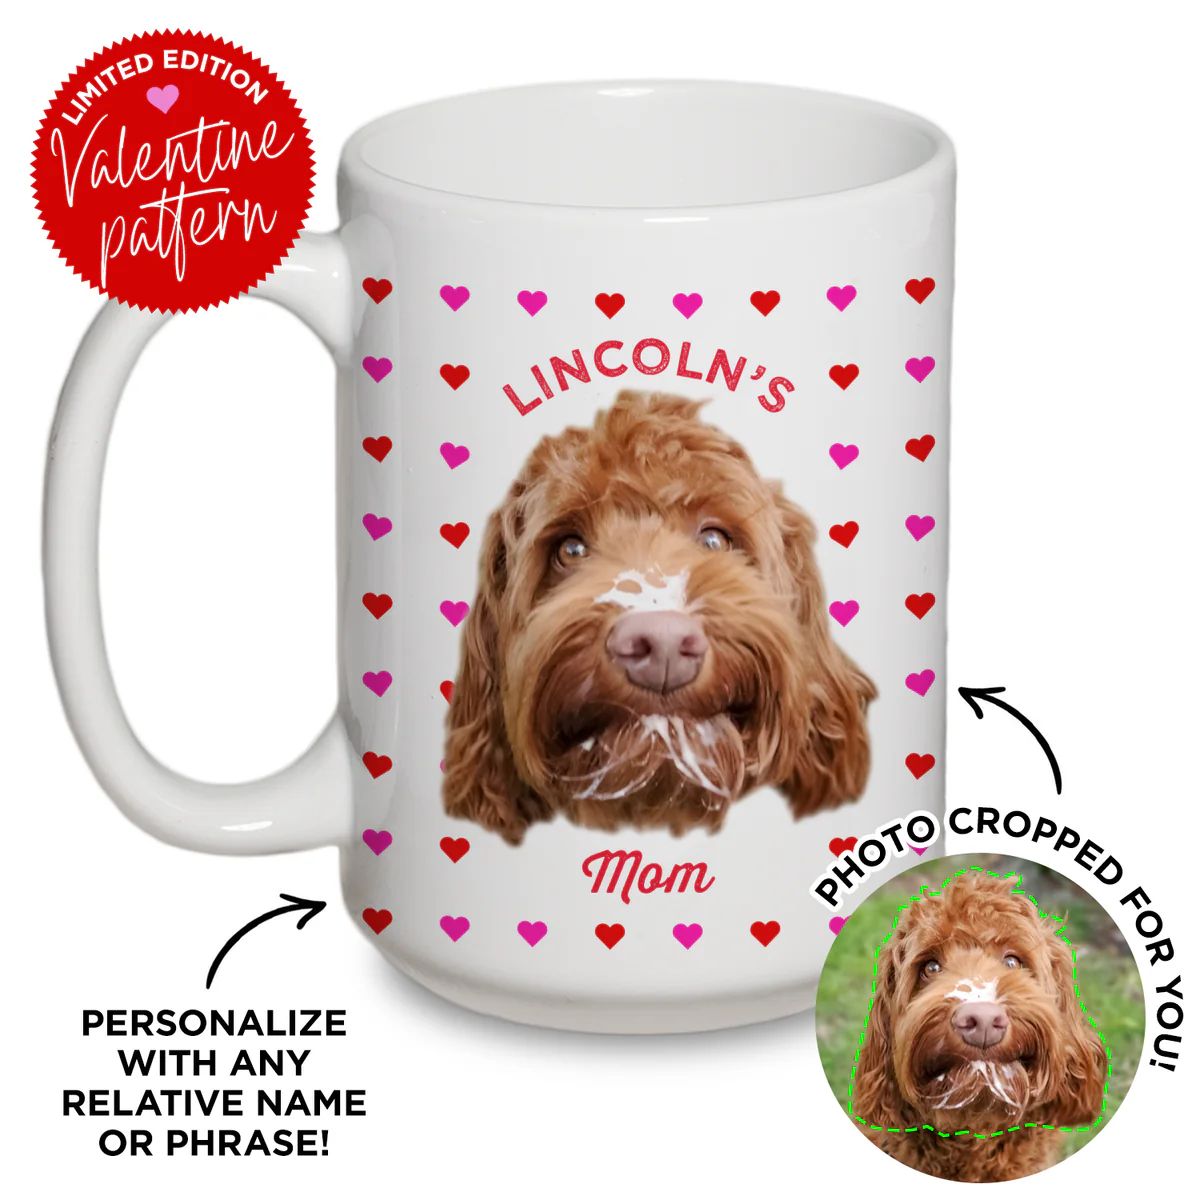 Personalized Valentine's Day Pet Mug | Type League Press